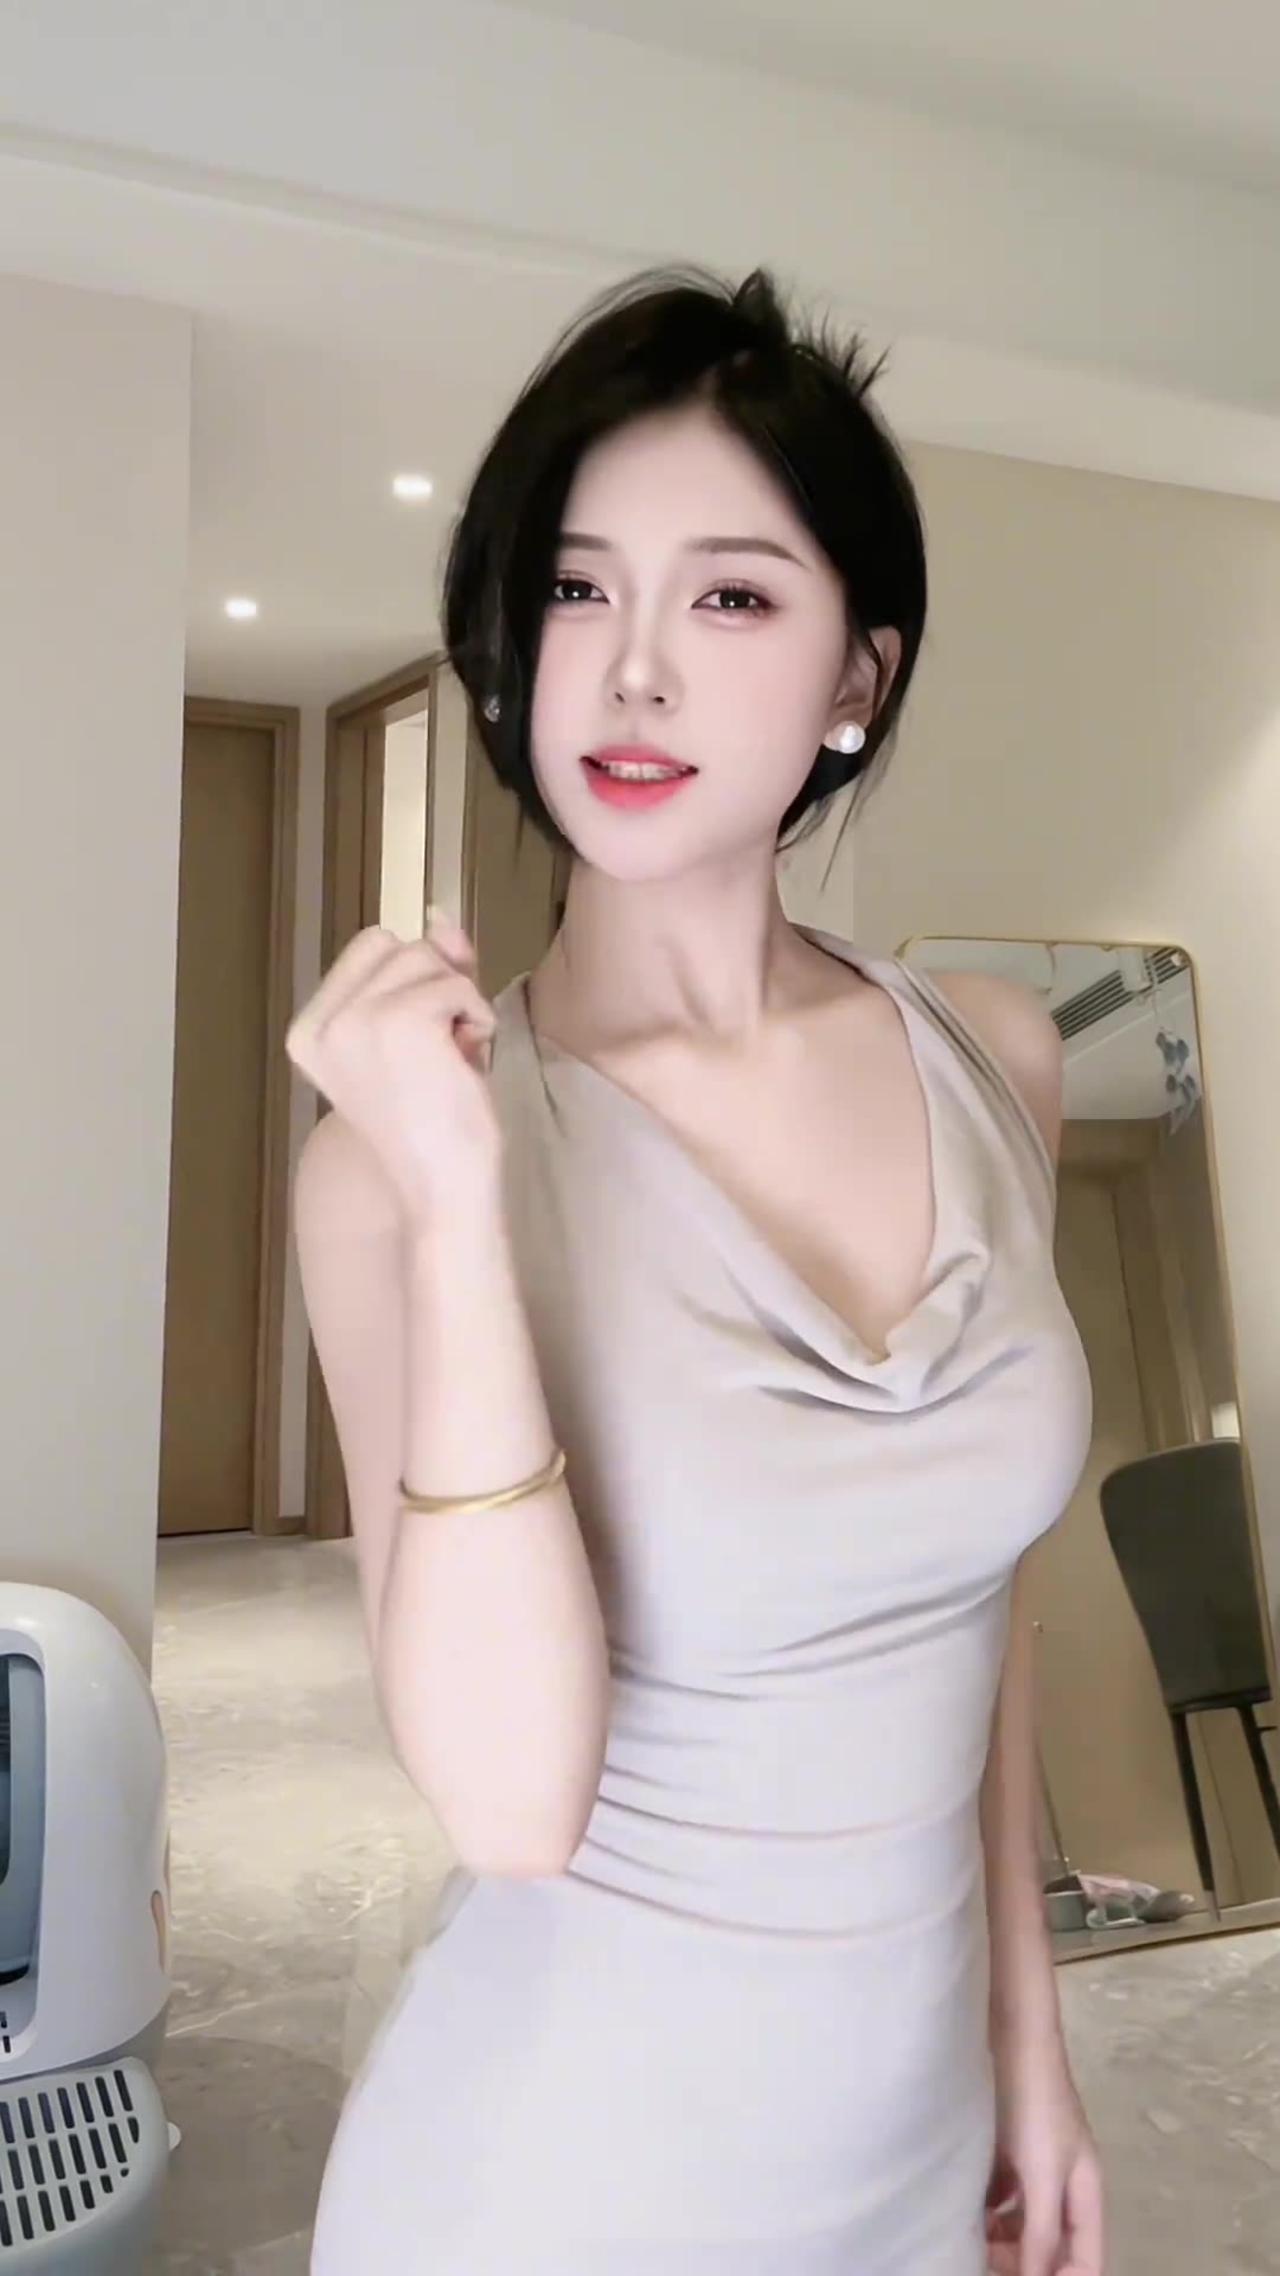 Beautiful Chinese Girls - One News Page VIDEO